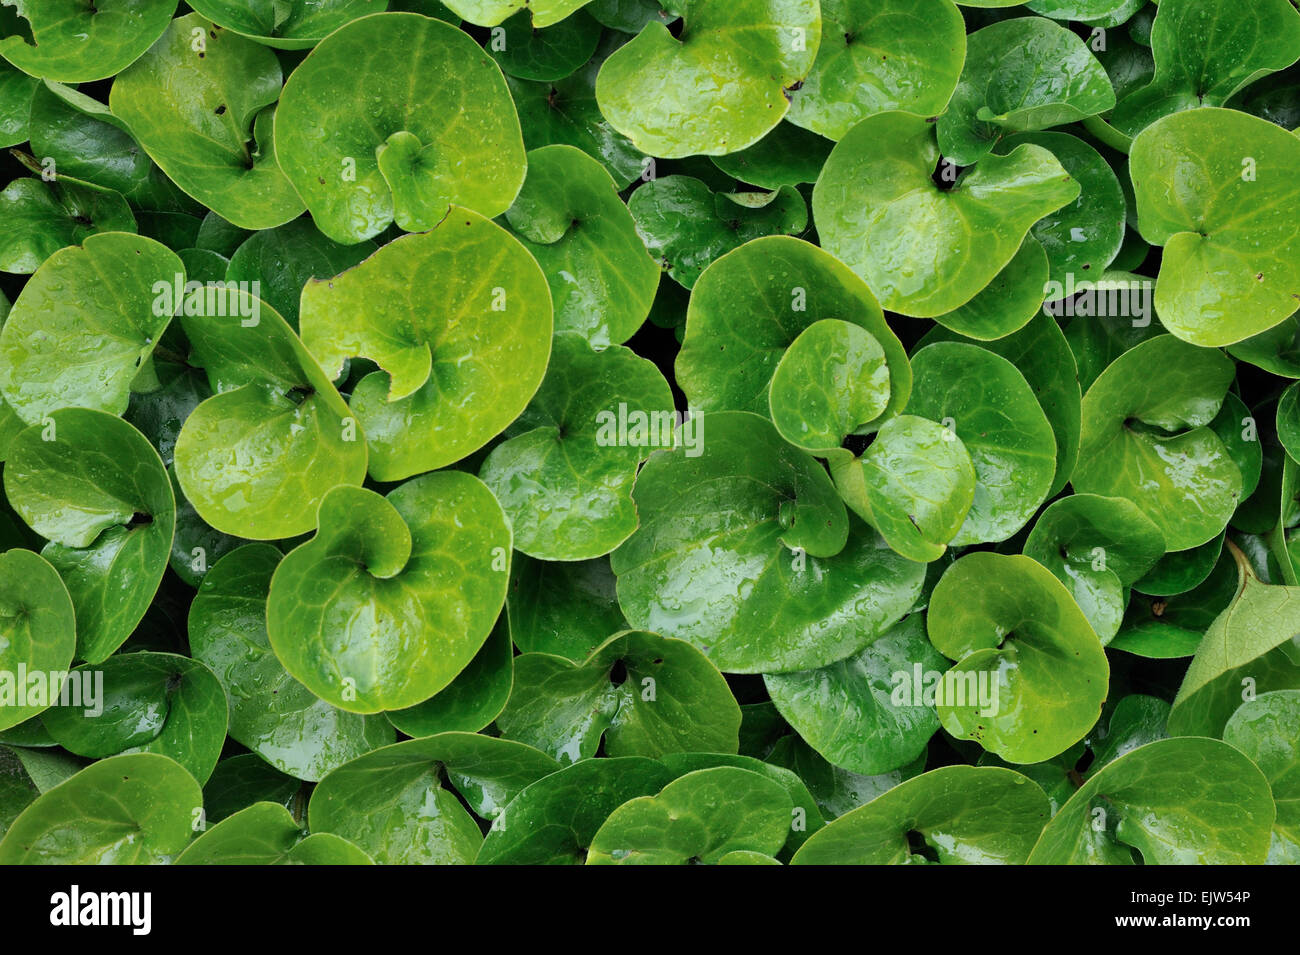 European Wild ginger / Asarabacca / Haselwort / Wild Spikenard (Asarum europaeum) close up of green leaves Stock Photo